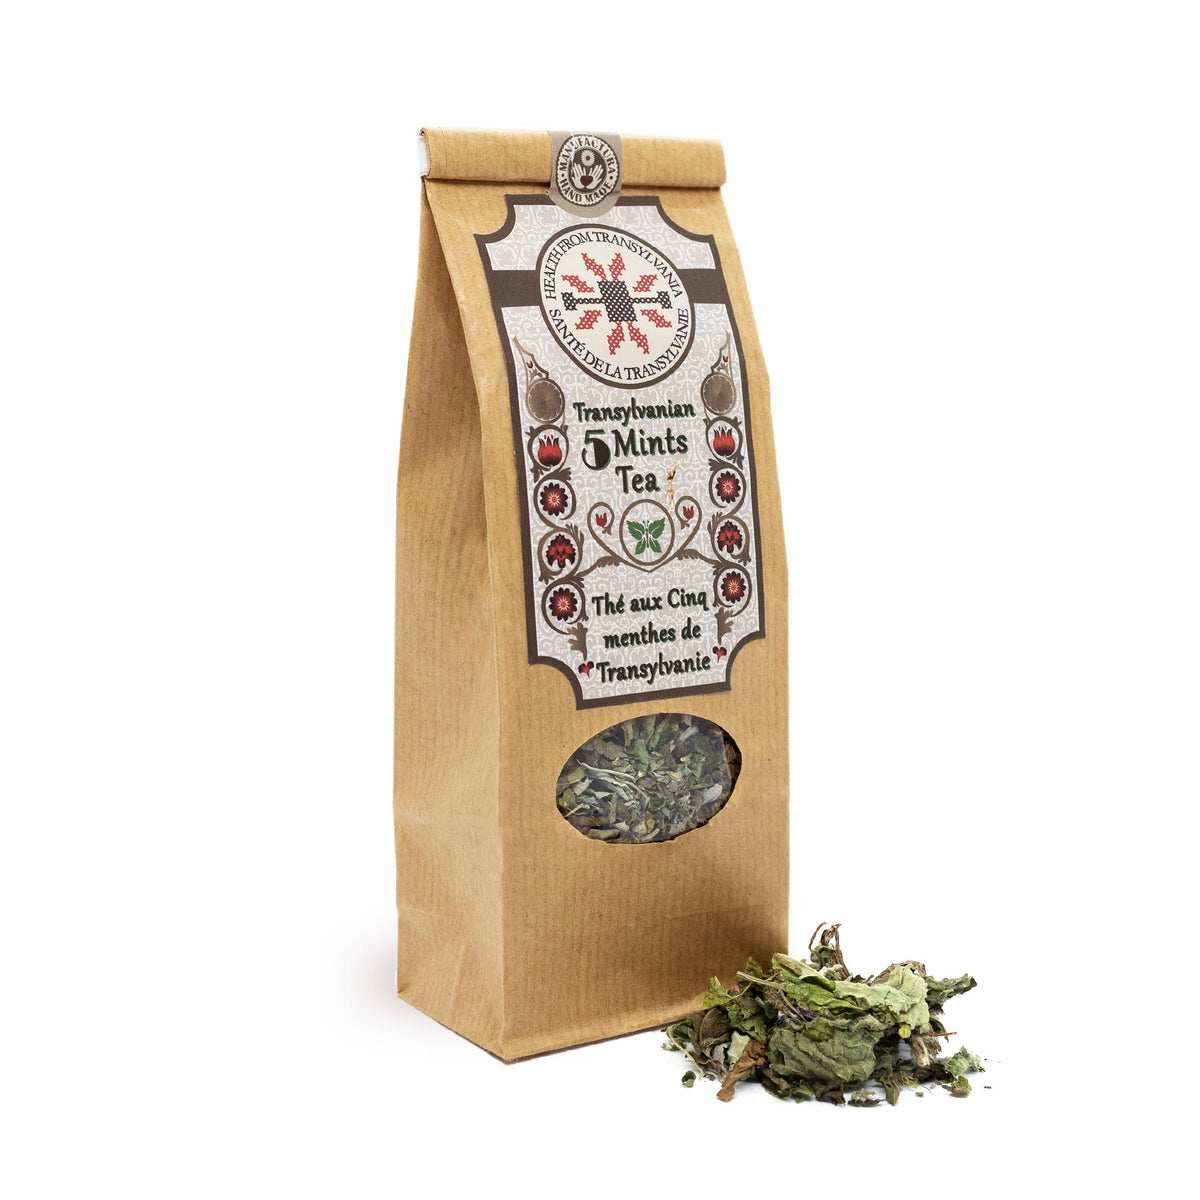 Health from Europe Organic 5 Mints herbal tea packet leaves